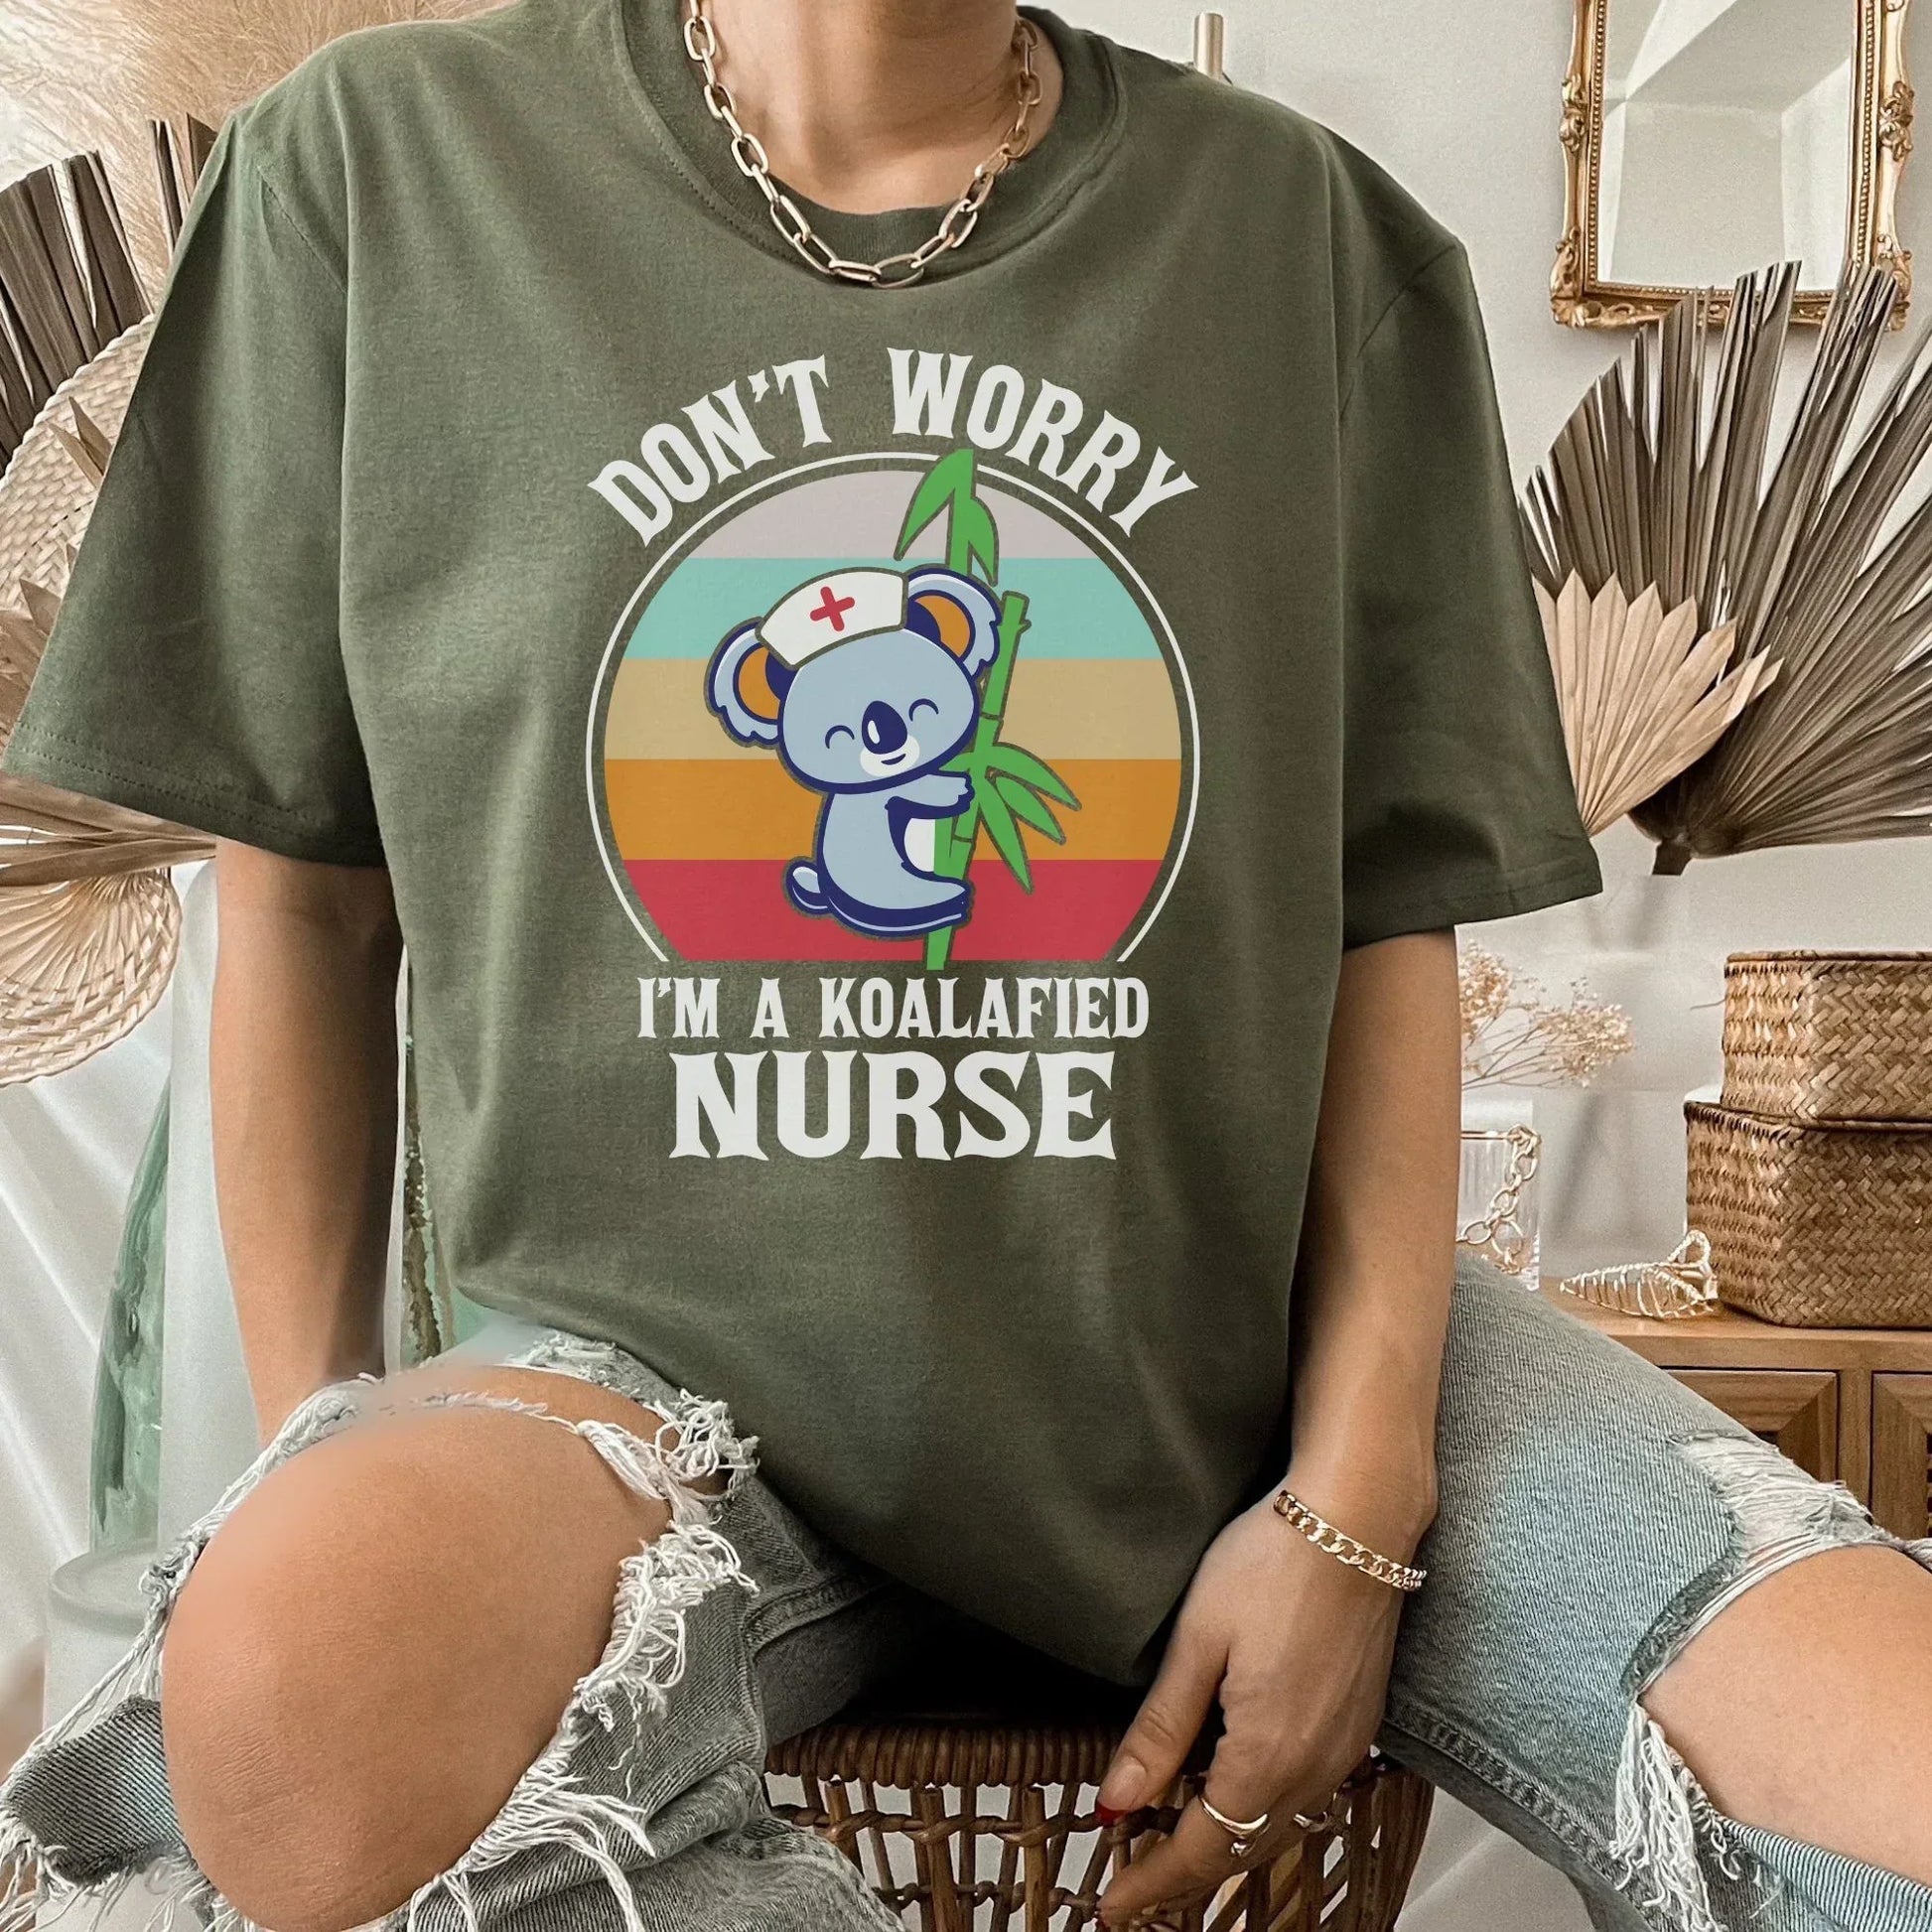 Kolafied, Registered Nurse Shirt, Nursing Student, Pediatric Nurse, ER Nurse Sweatshirt, Nurse Gift, Nurse Hoodie, Funny Nurse Shirt, Nurse Practitioner HMDesignStudioUS